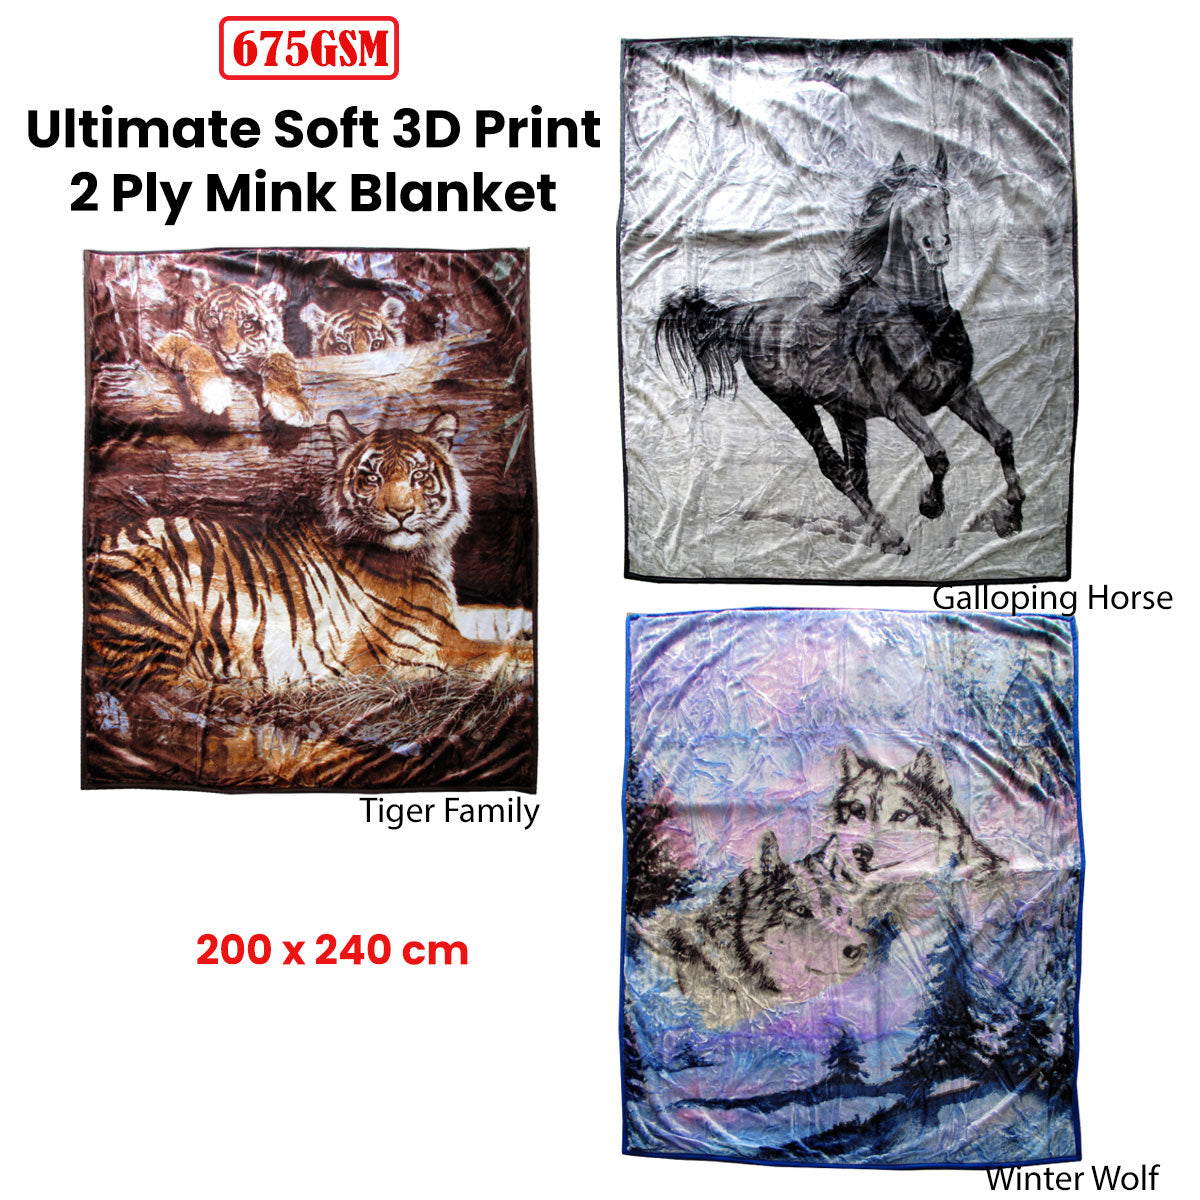 675gsm 2 Ply 3D Print Faux Mink Blanket Queen 200x240 cm Tiger Family - Newstart Furniture